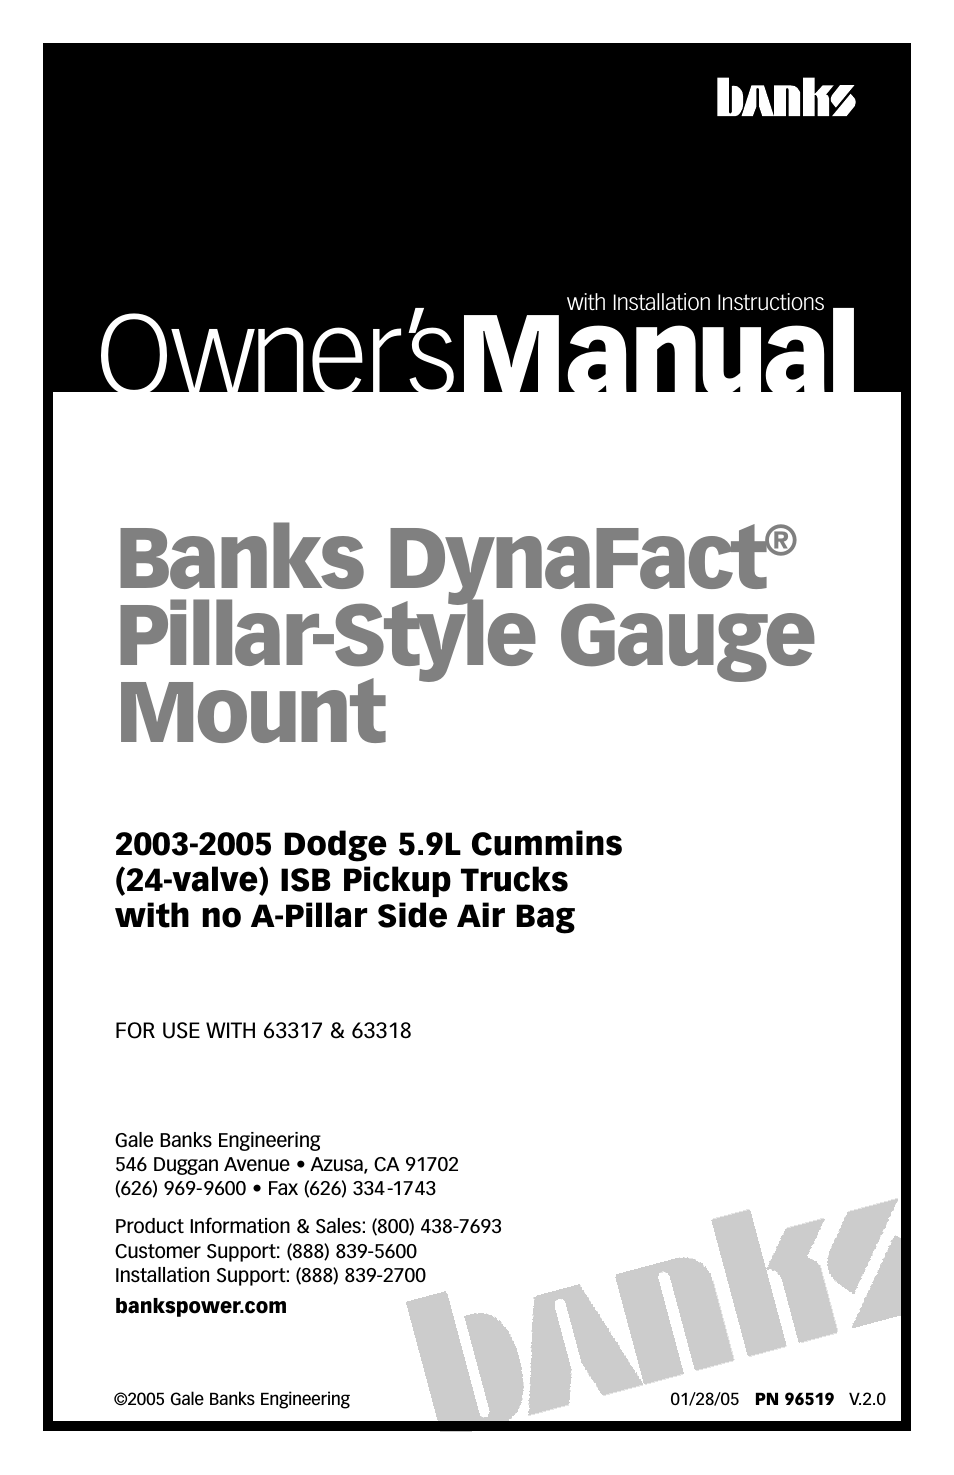 DynaFact pillar-style gauge mount '03-05 Dodge 5.9L Cummins Truck